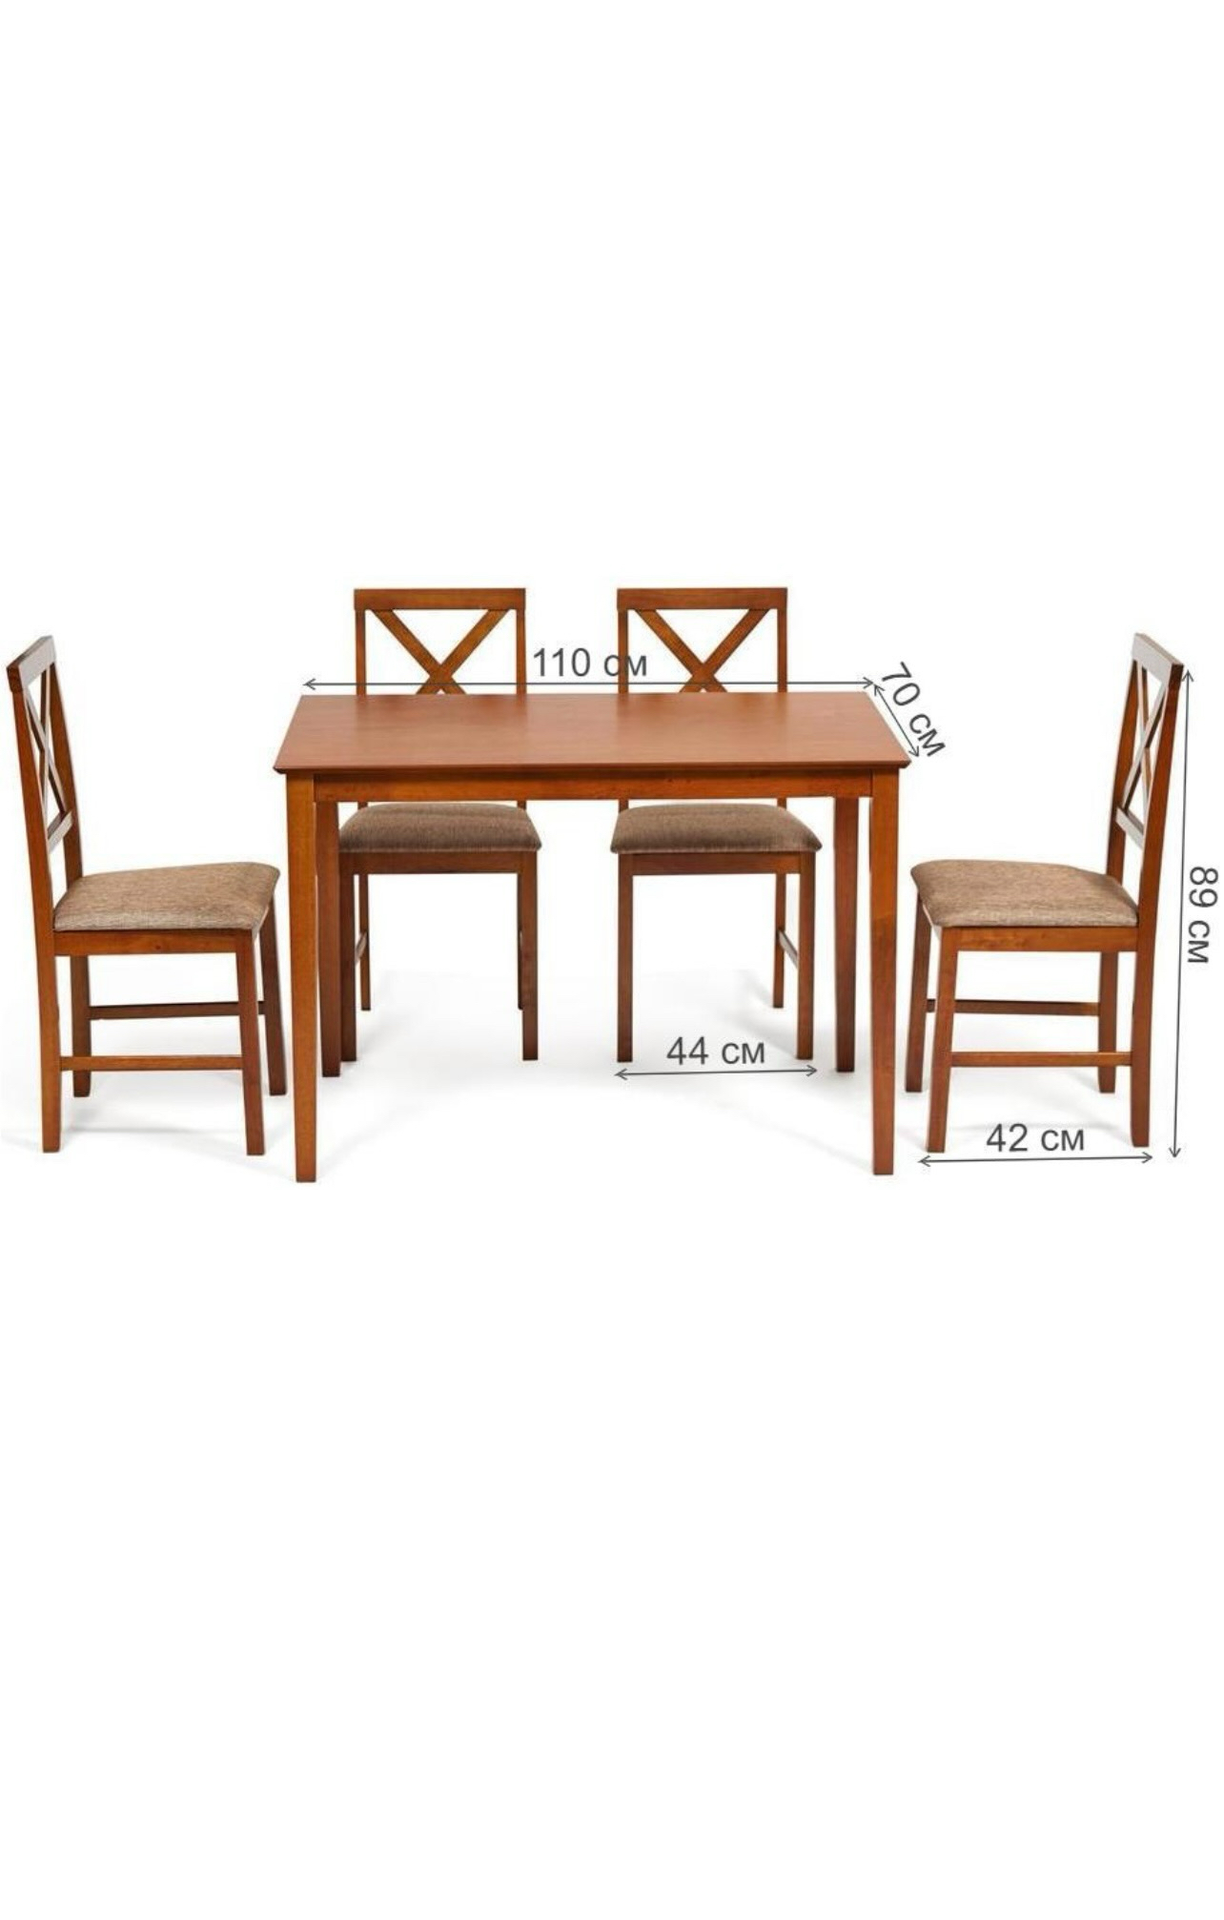 Обеденный комплект Хадсон  (стол +4 стула)